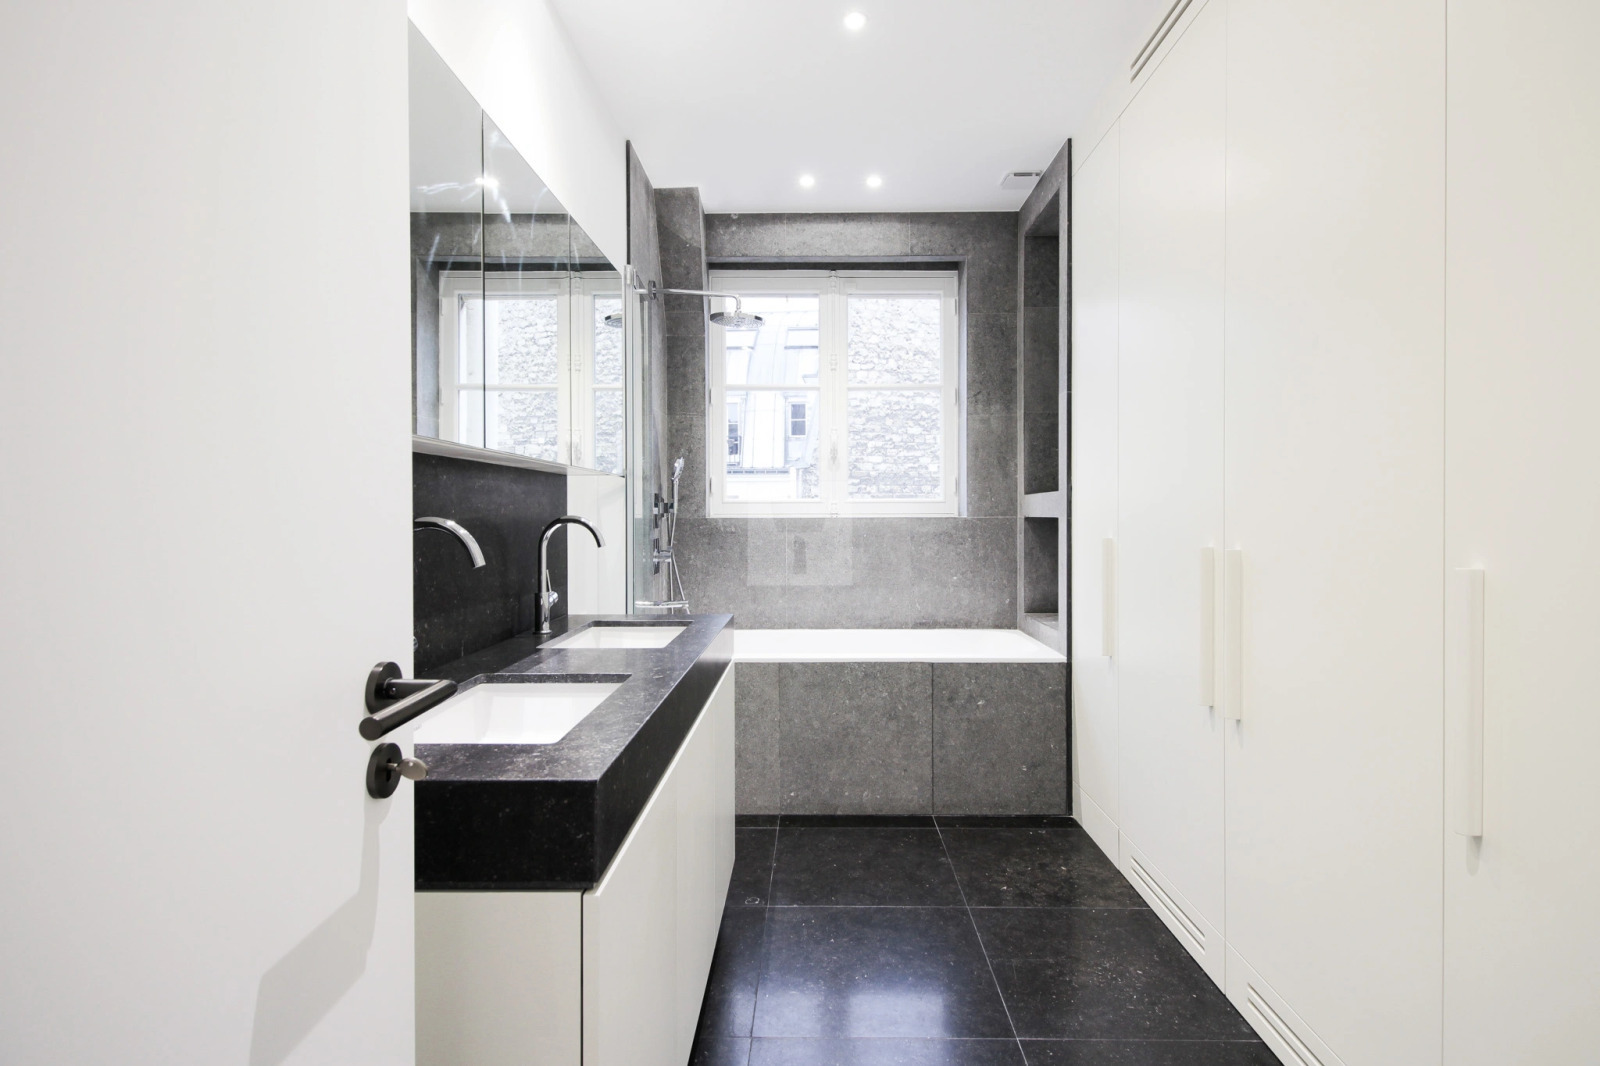 Bathroom bluestone, floor, wall, bath and countertop